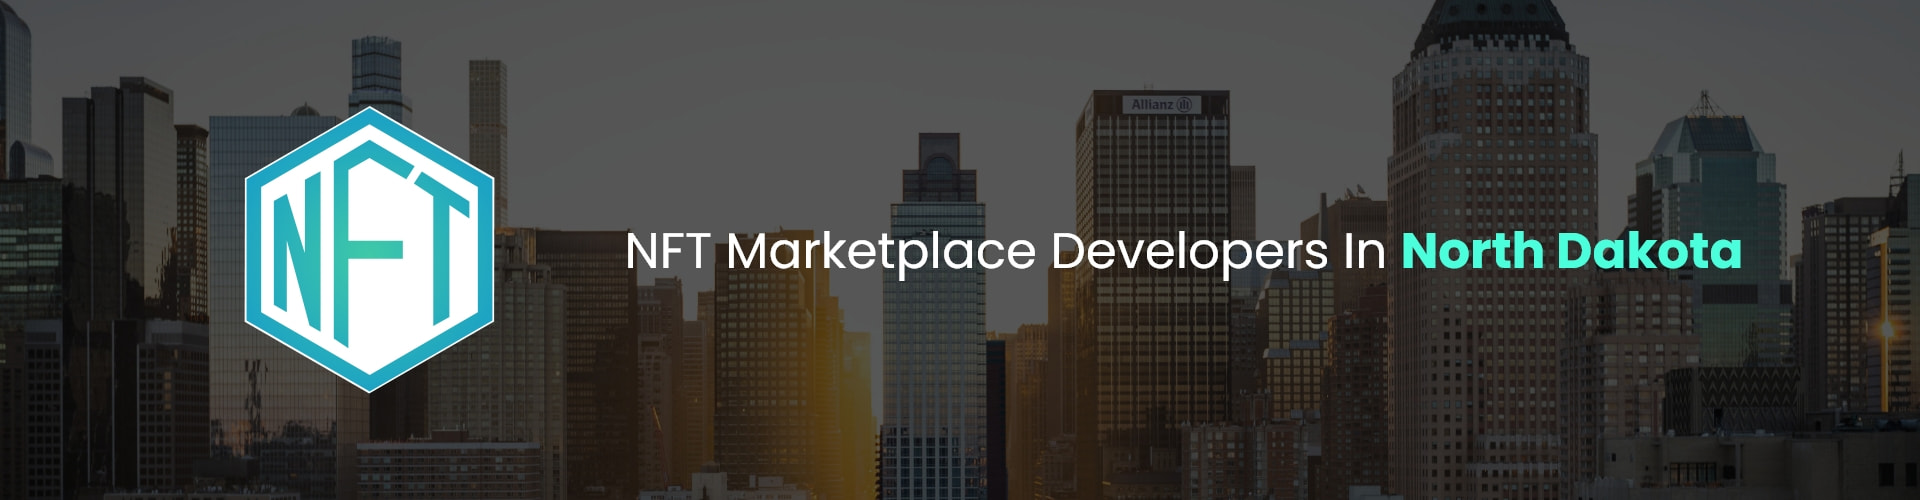 hire nft marketplace developers in north dakota